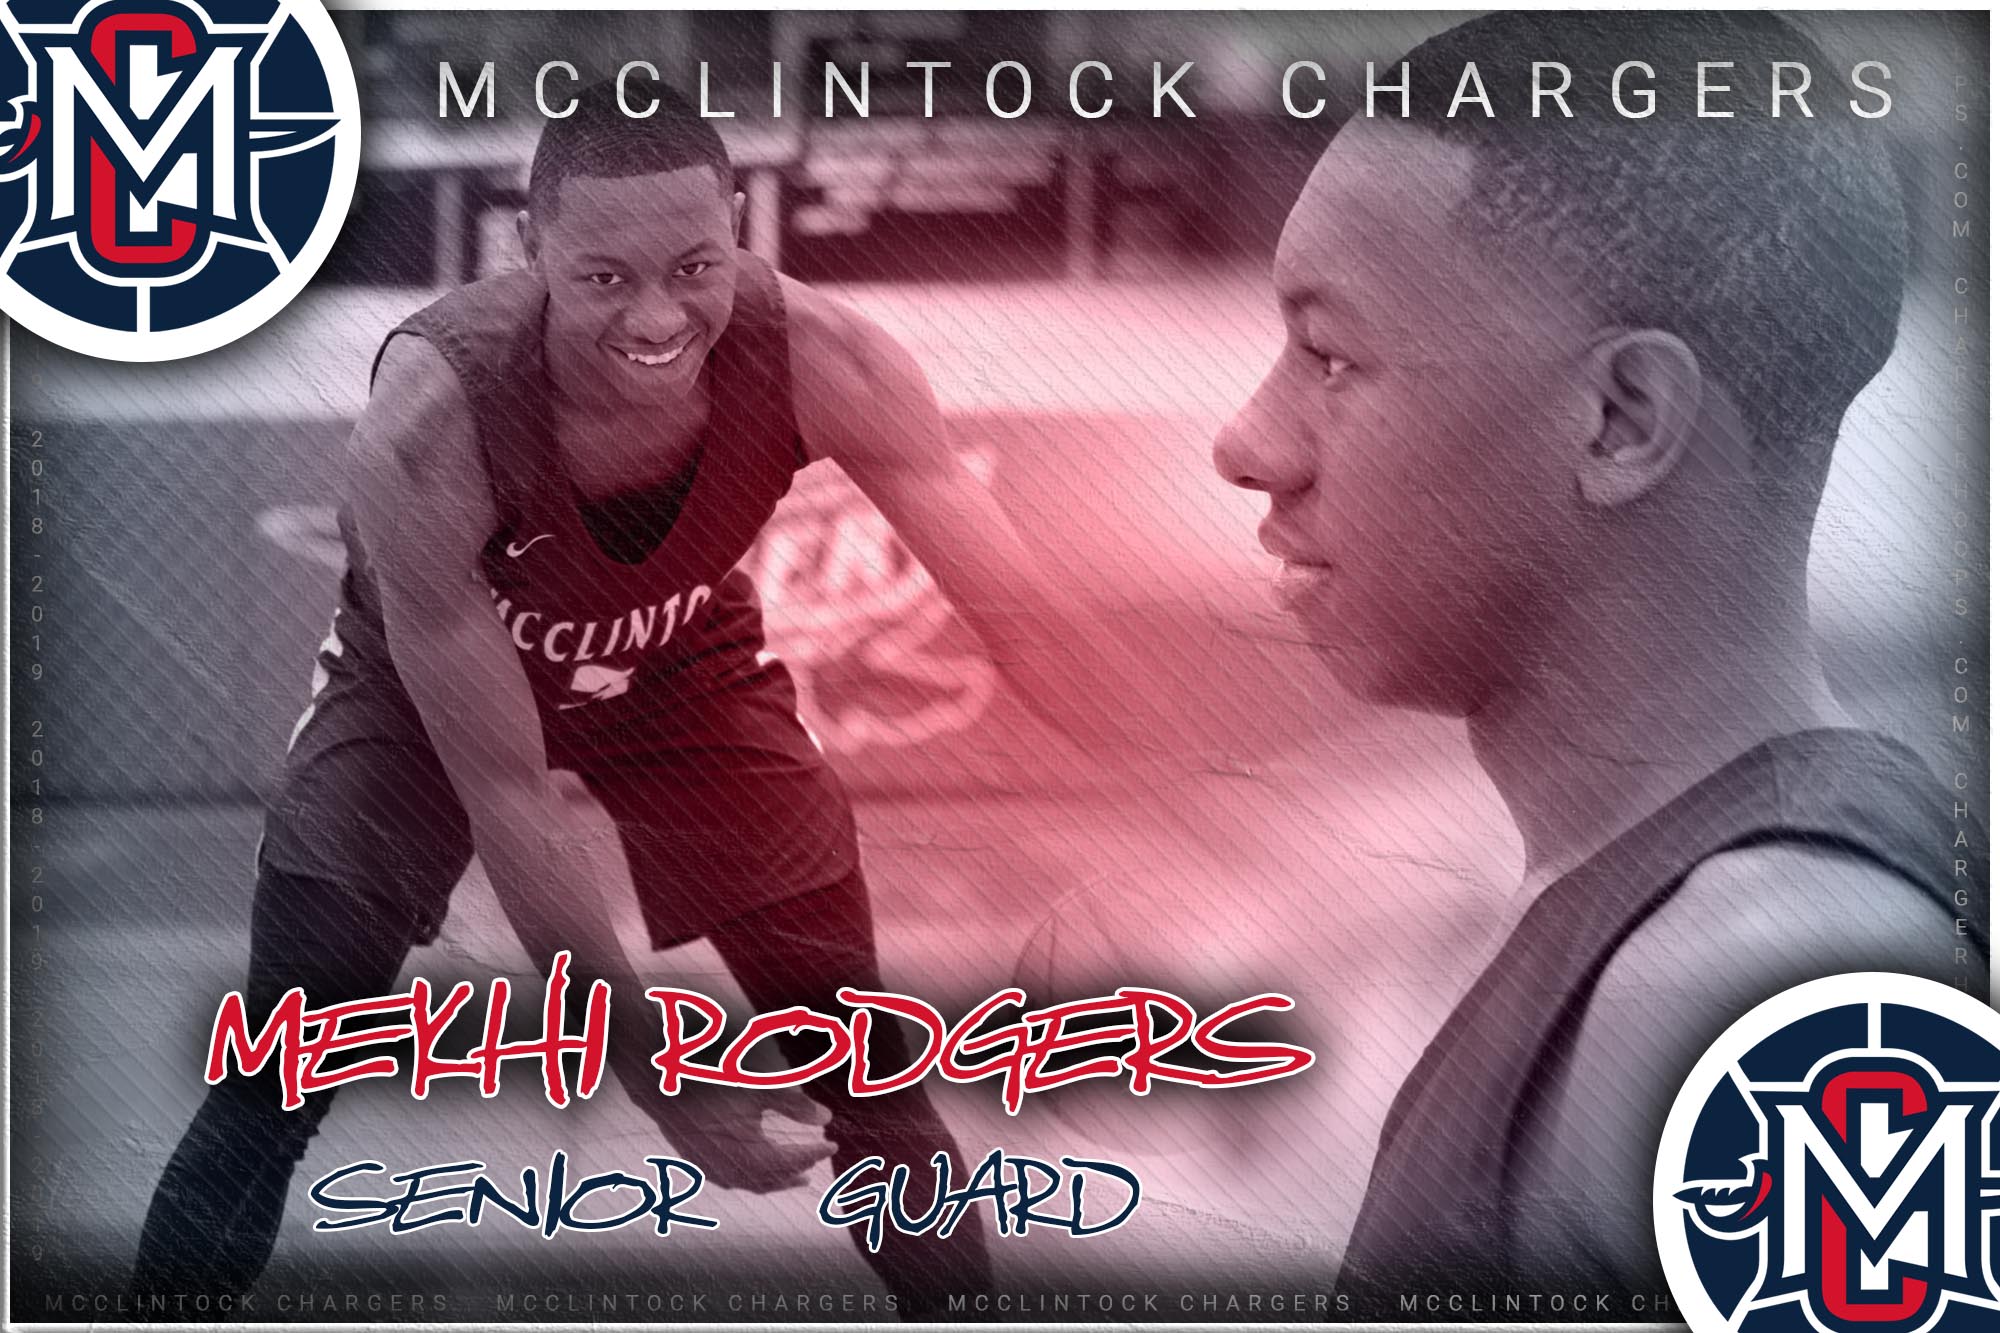 McClintock Chargers Basketball- Mekhi Rodgers